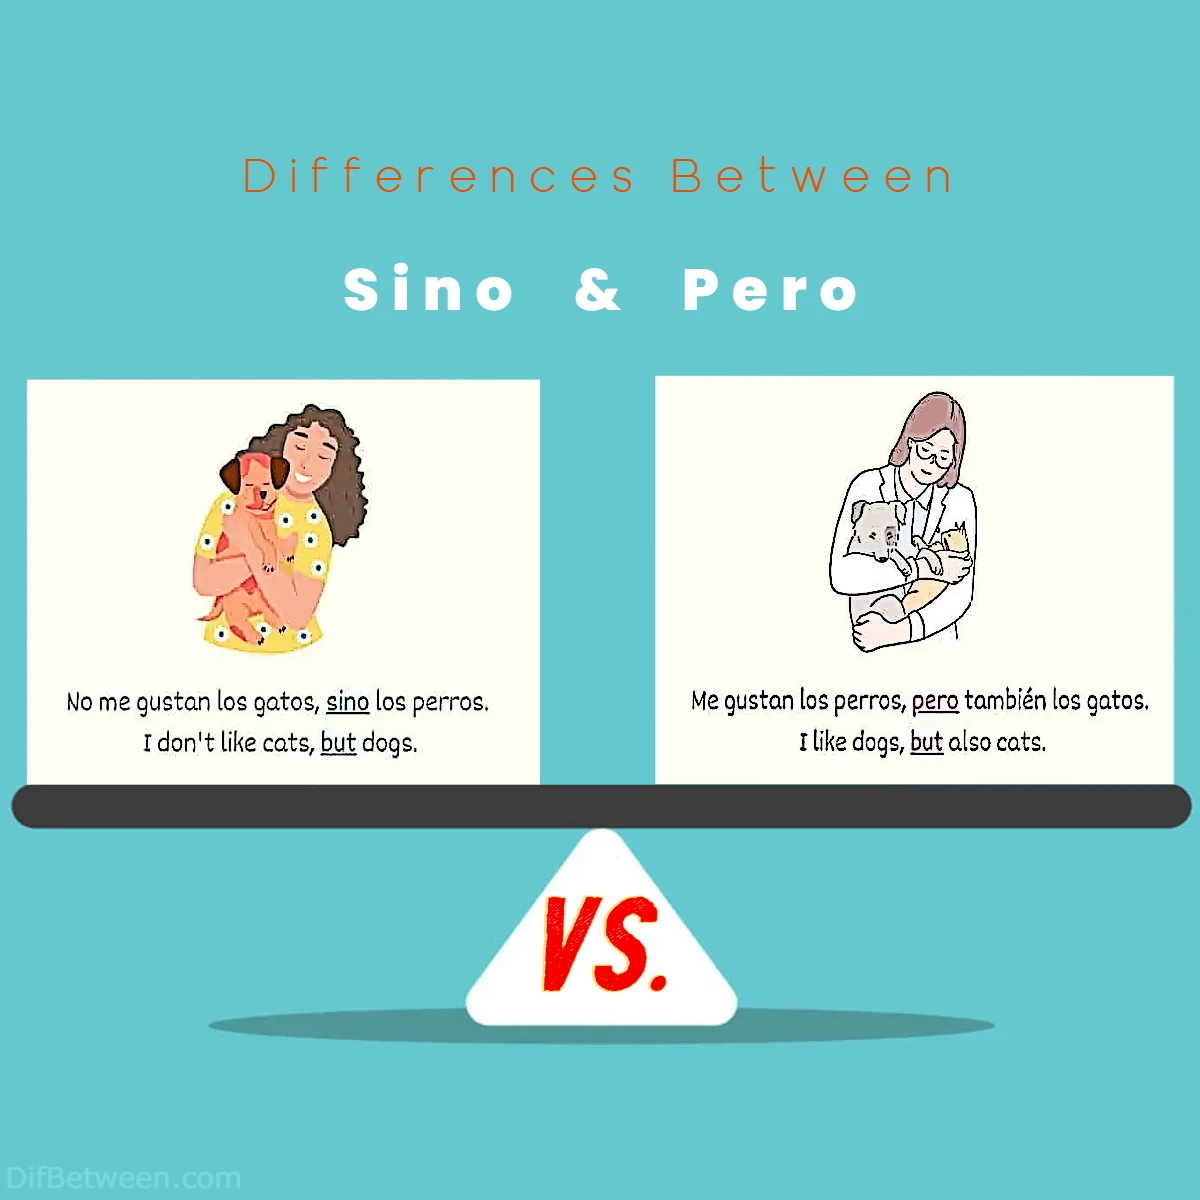 Differences Between Sino vs Pero